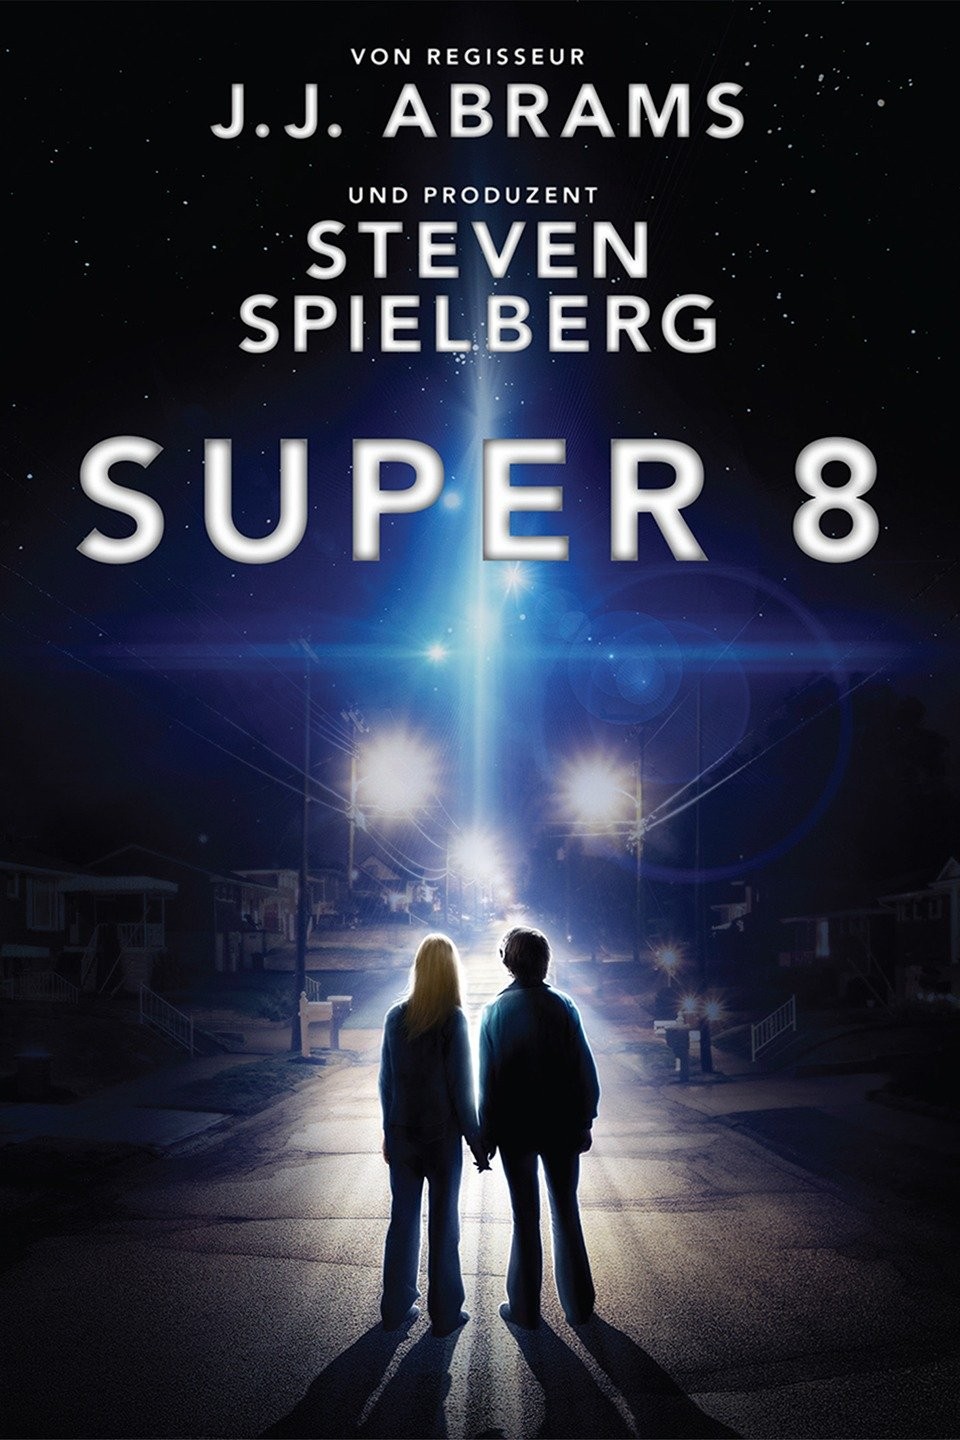 Super 8 (2011) Official Trailer, J.J. Abrams